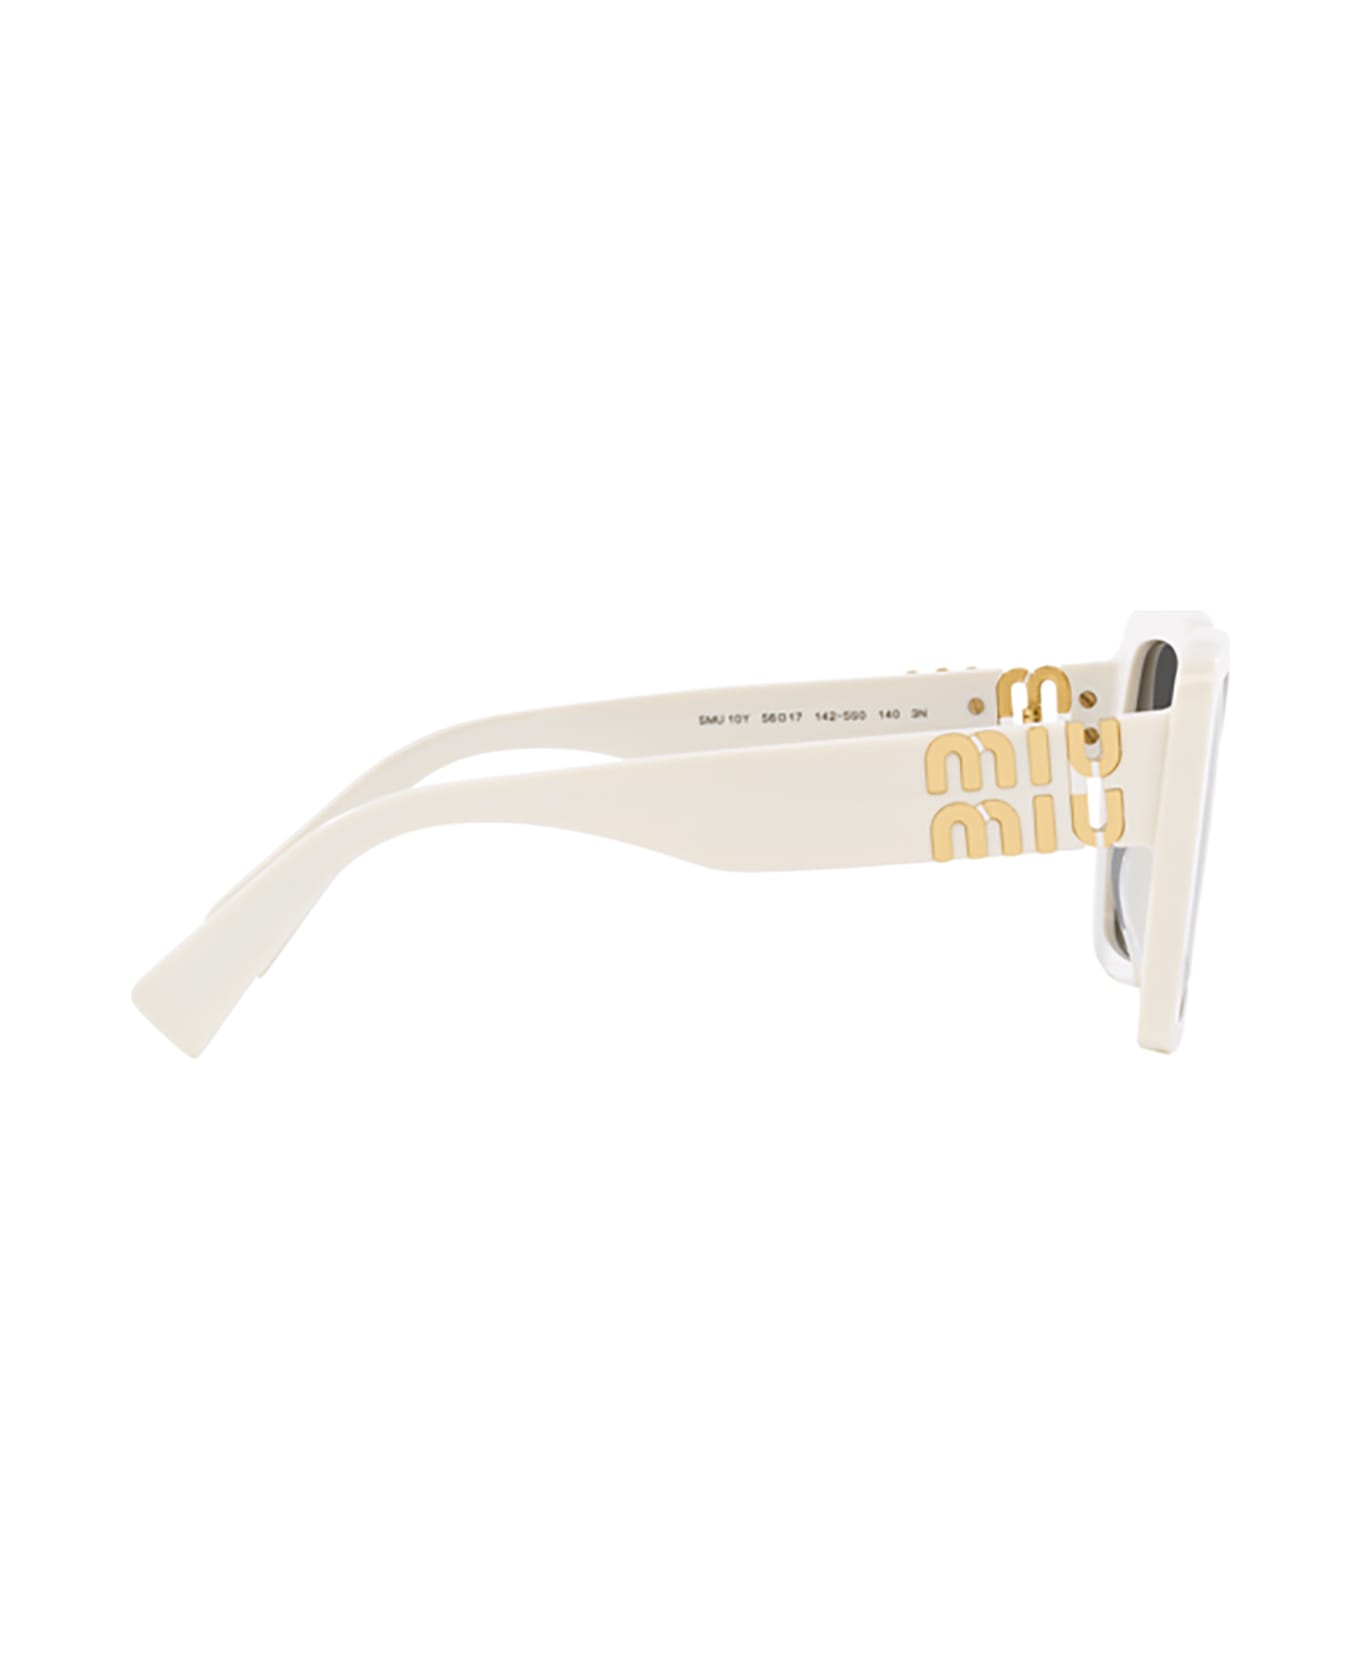 Miu Miu Eyewear Mu 10ys White Sunglasses - White サングラス